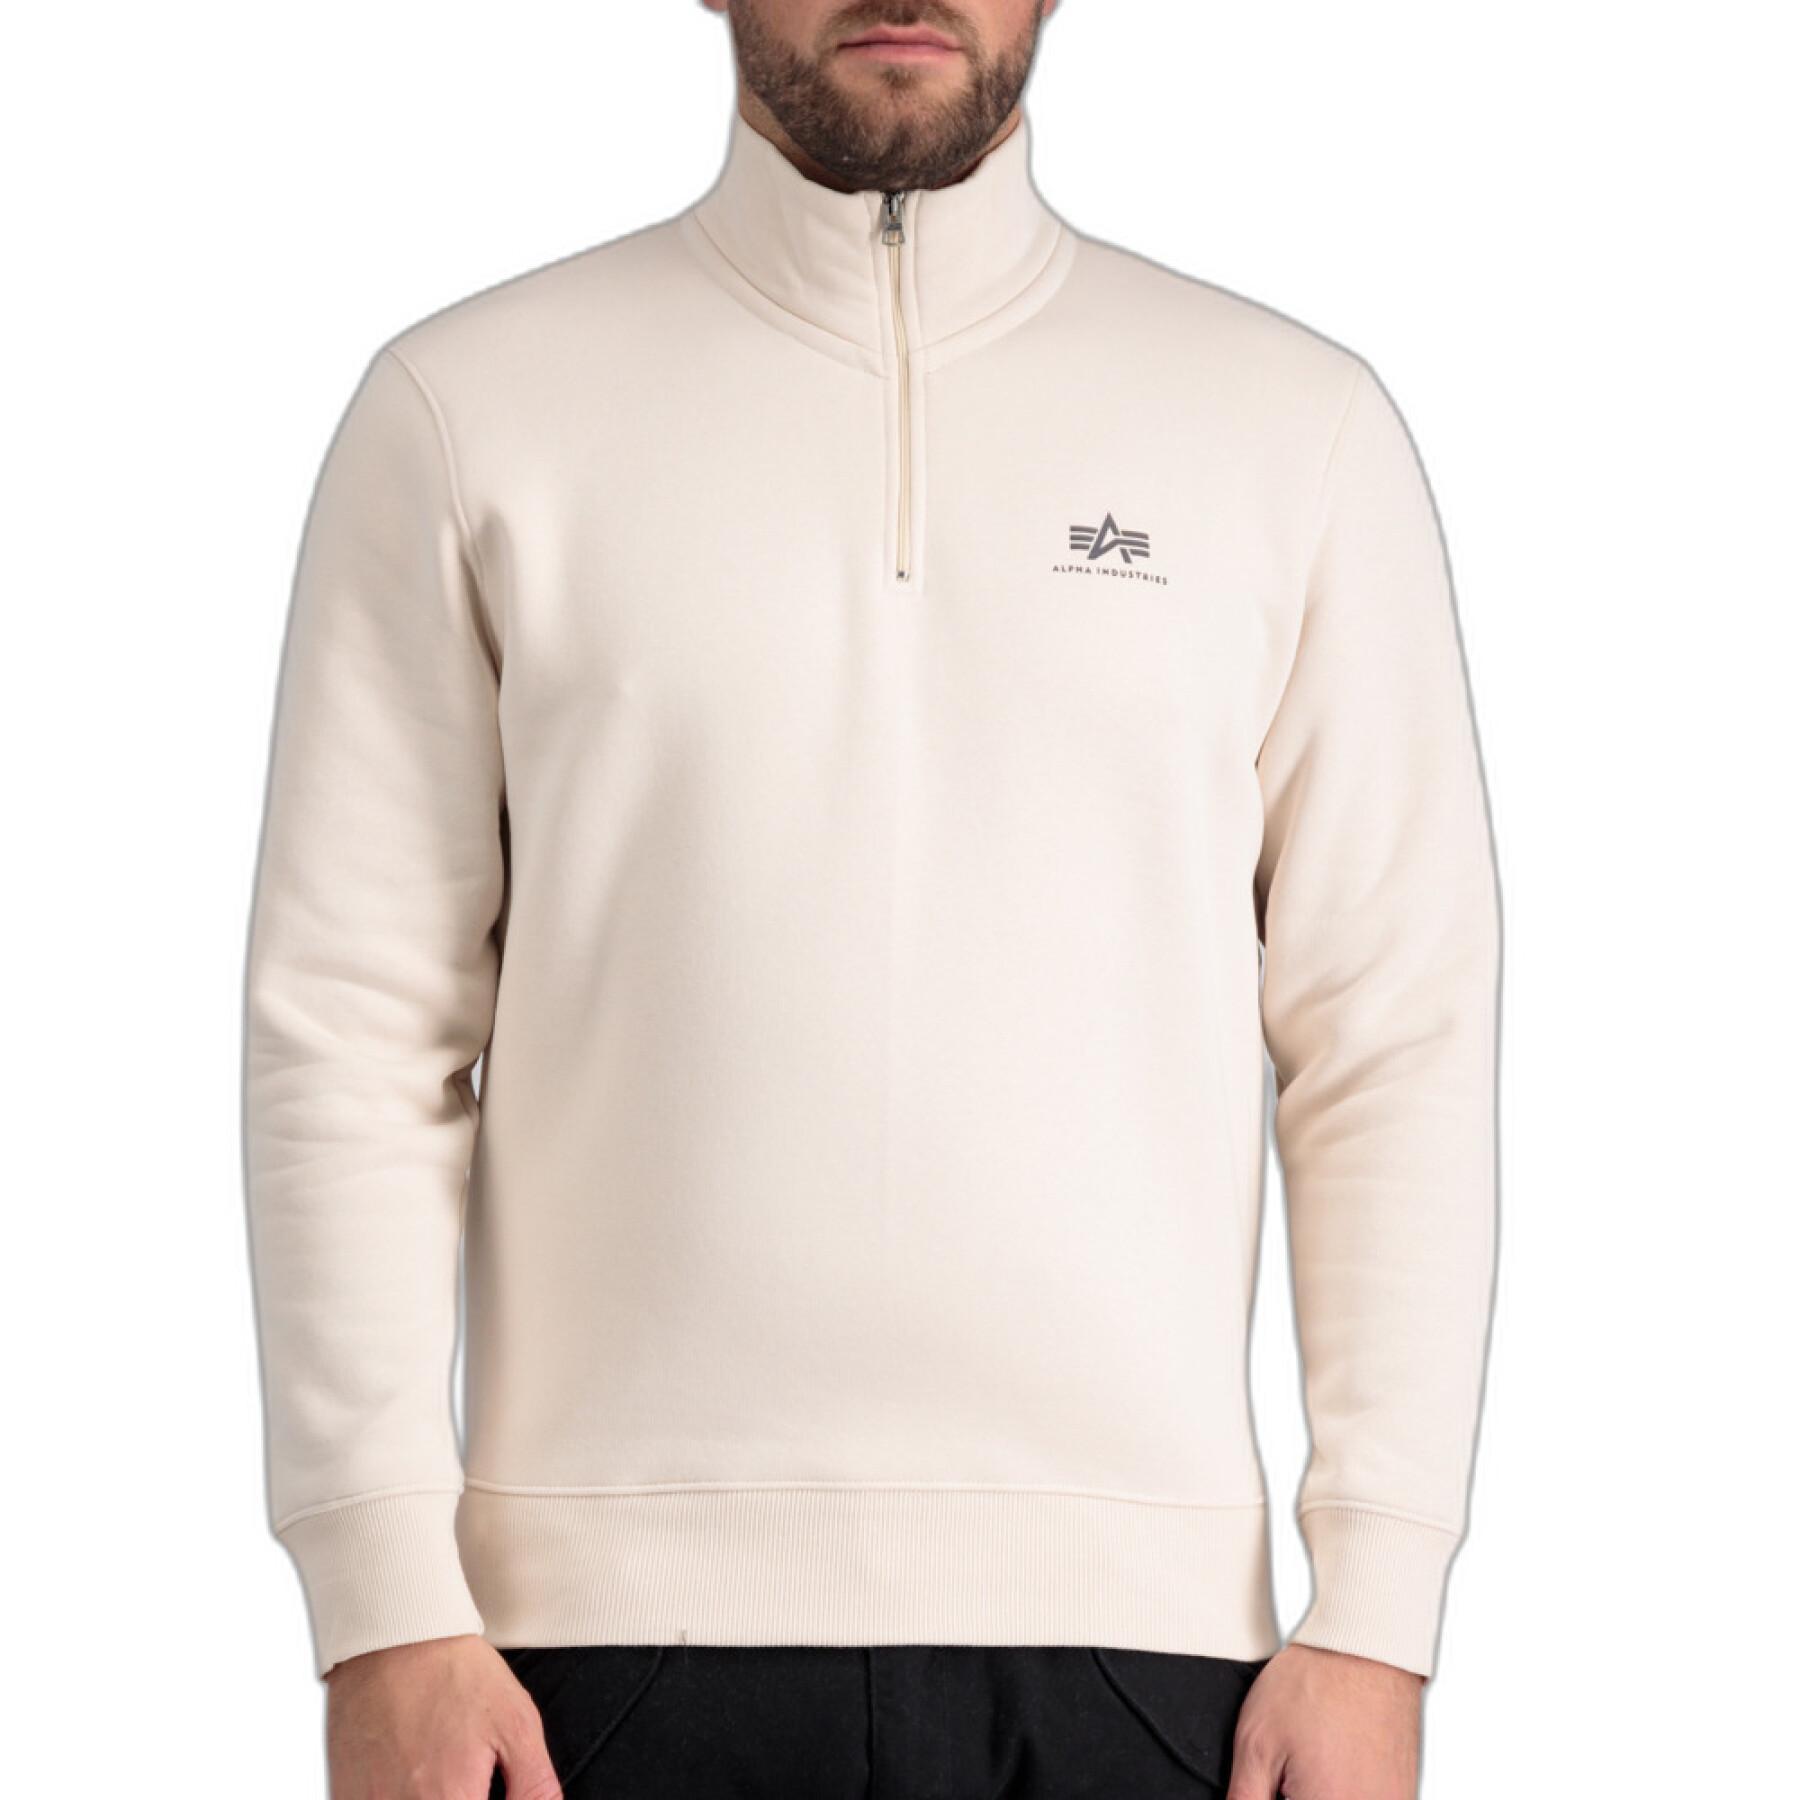 Sweatshirt half zip Lifestyle - Man Alpha - Sweatshirts Industries SL 